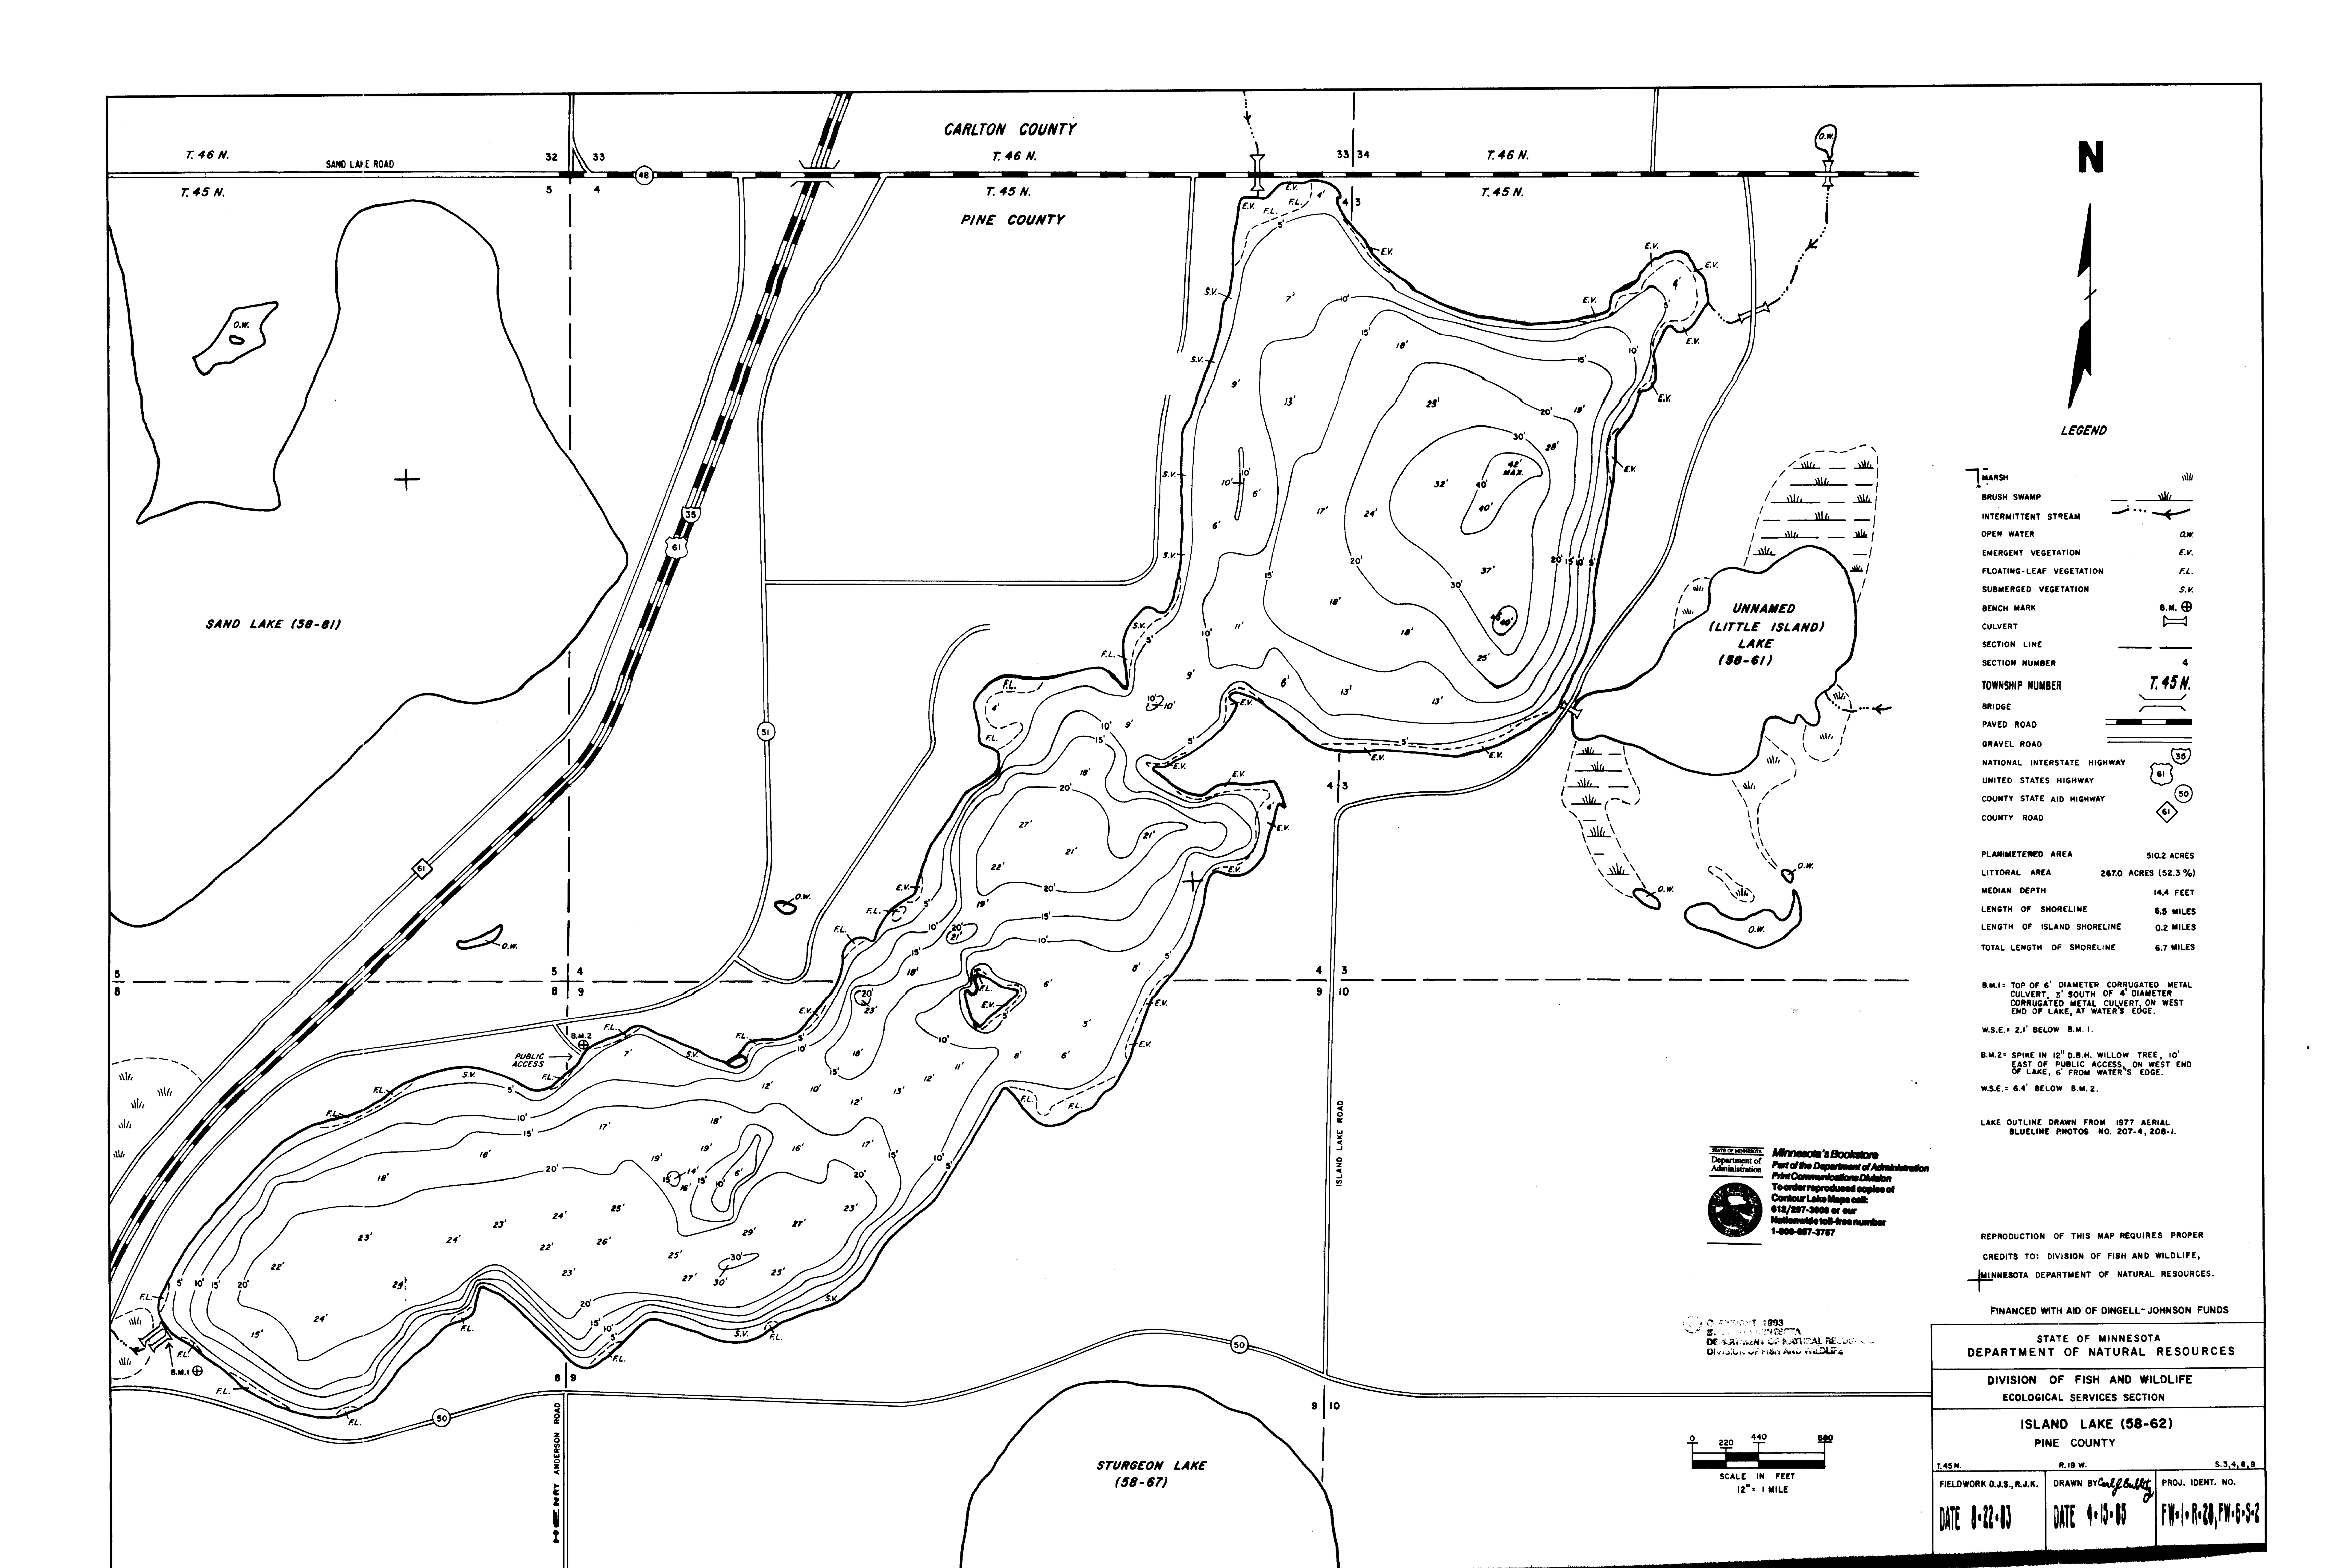 Lake depth maps: Minnesota DNR